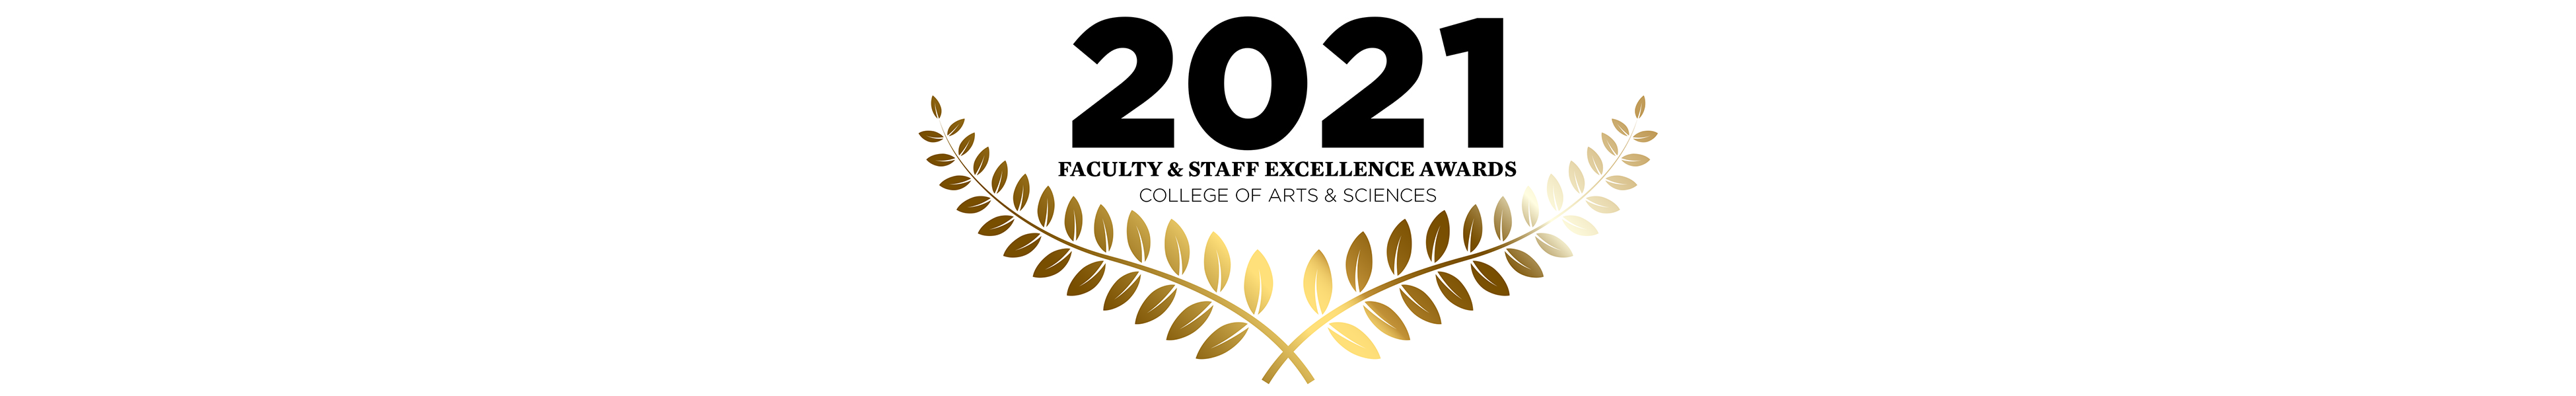 A&S 2021 Faculty & Staff Awards Logo